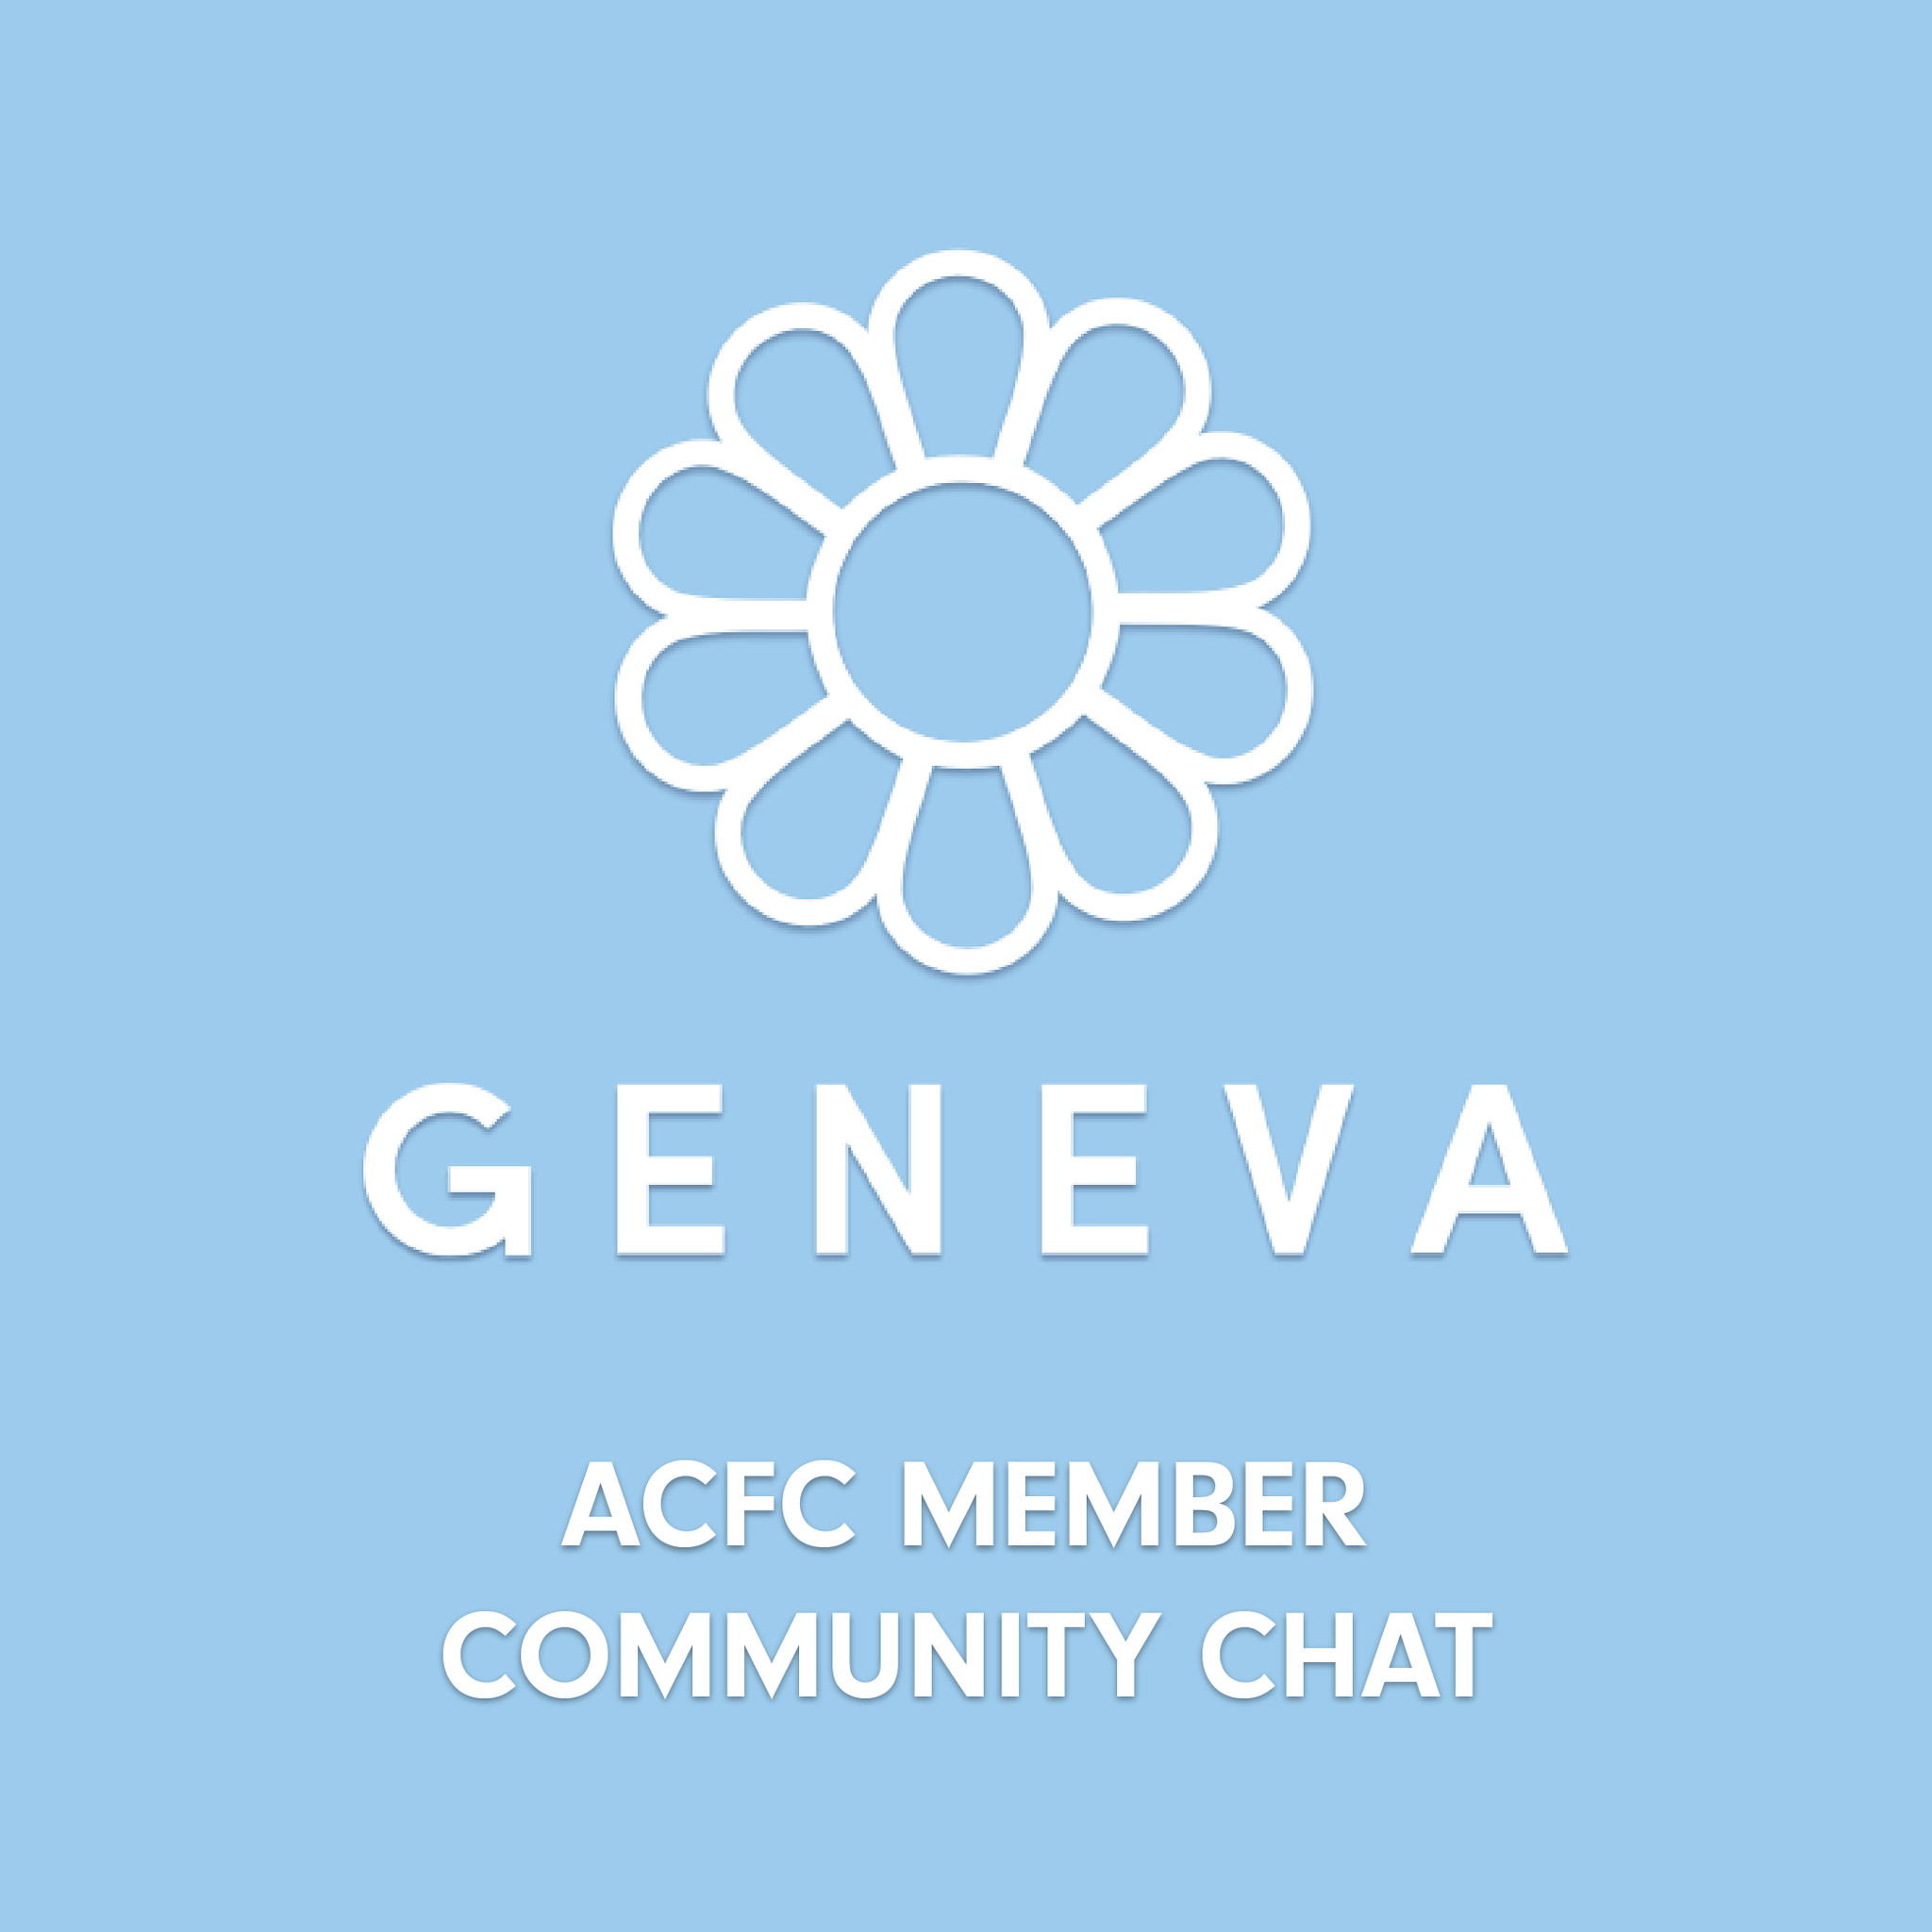 ACFC Member Community Chat - Powered by Geneva